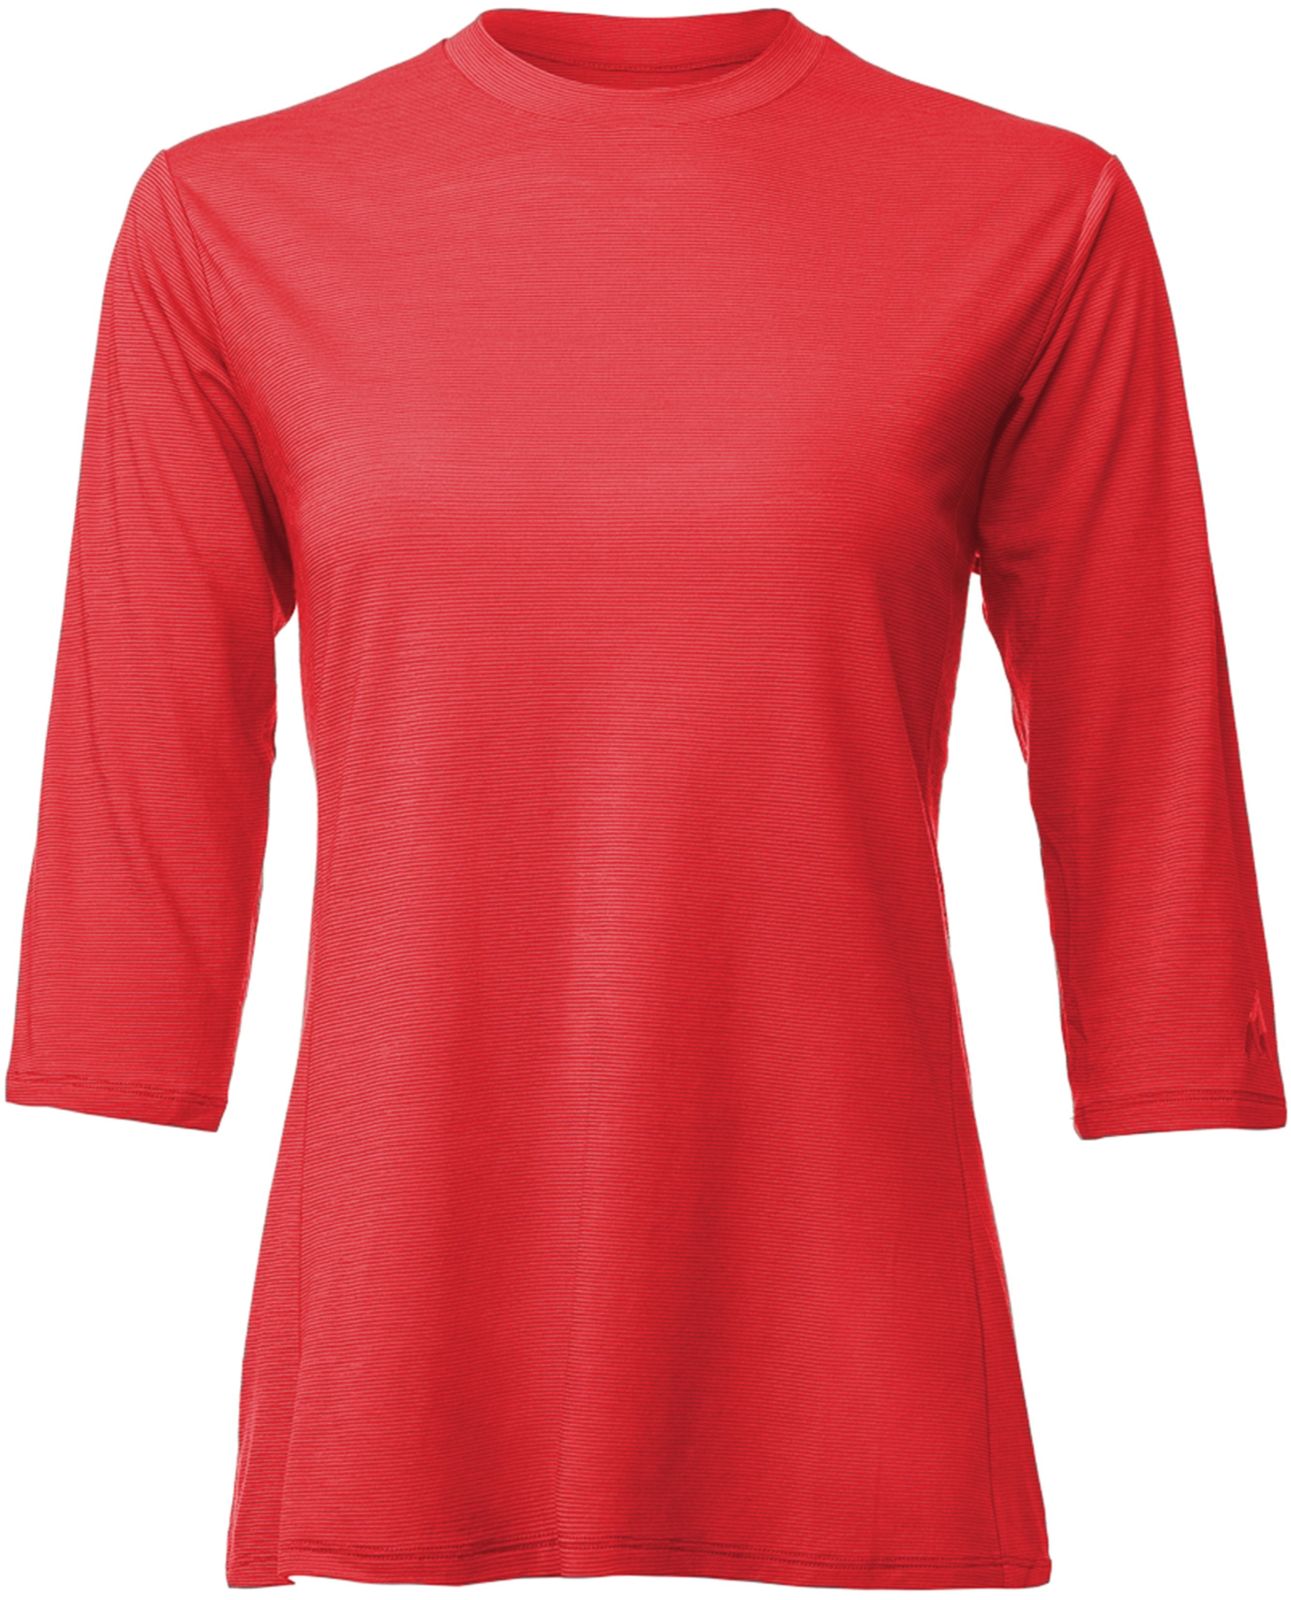 E-shop 7Mesh Desperado Shirt 3/4 Women's - Raspberry L